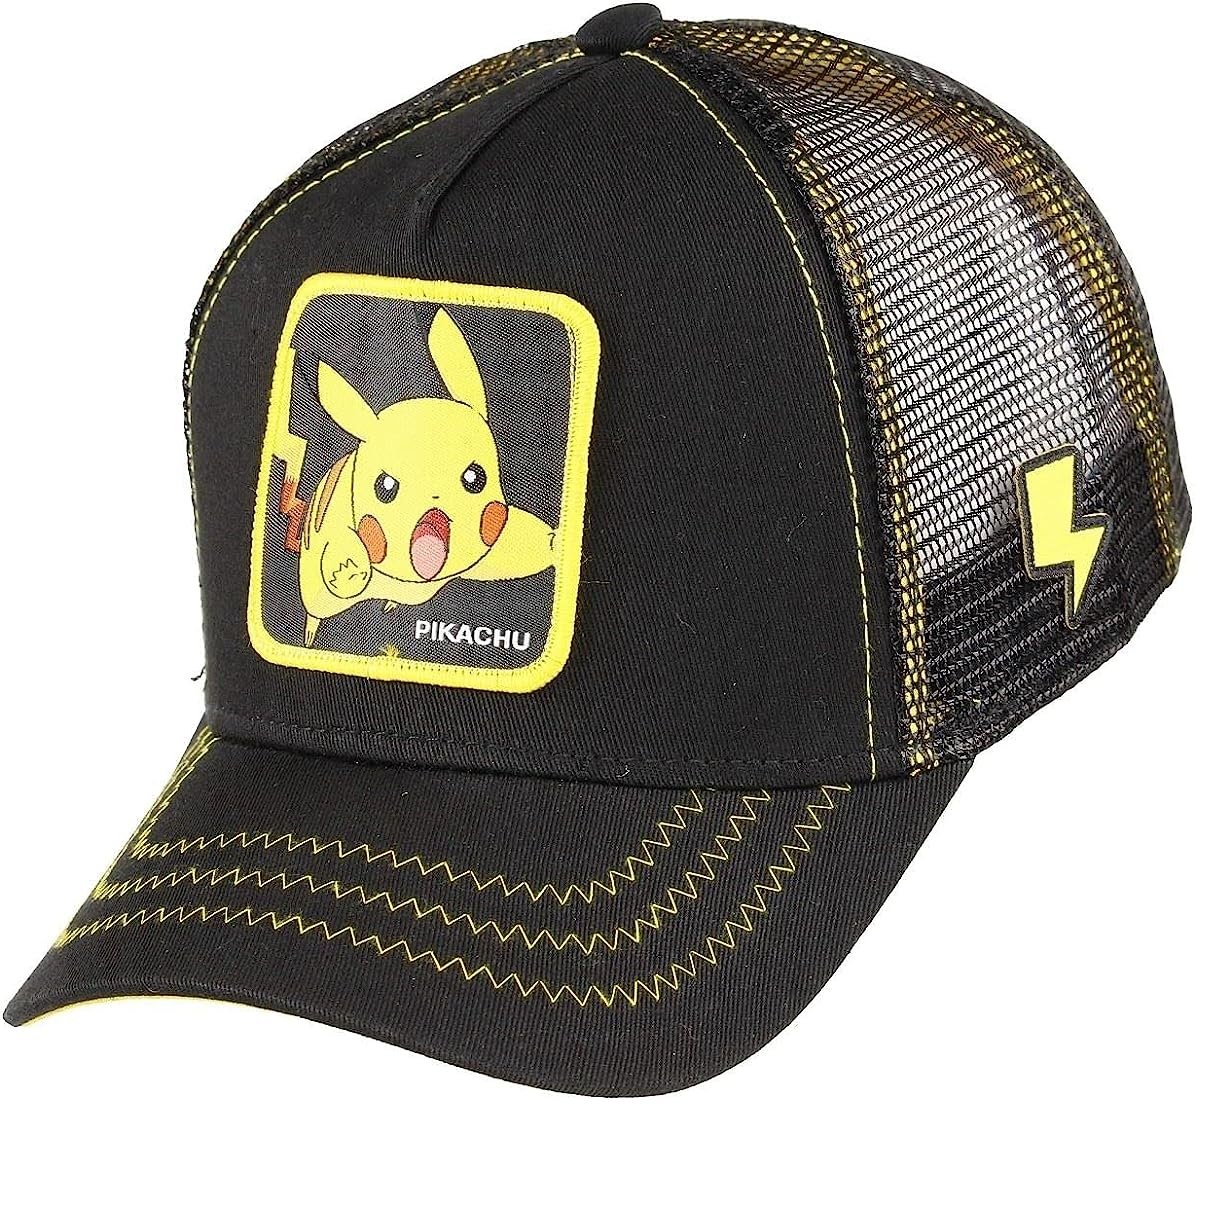 Gorra Trucker Pikachu Pokemon Messi Black